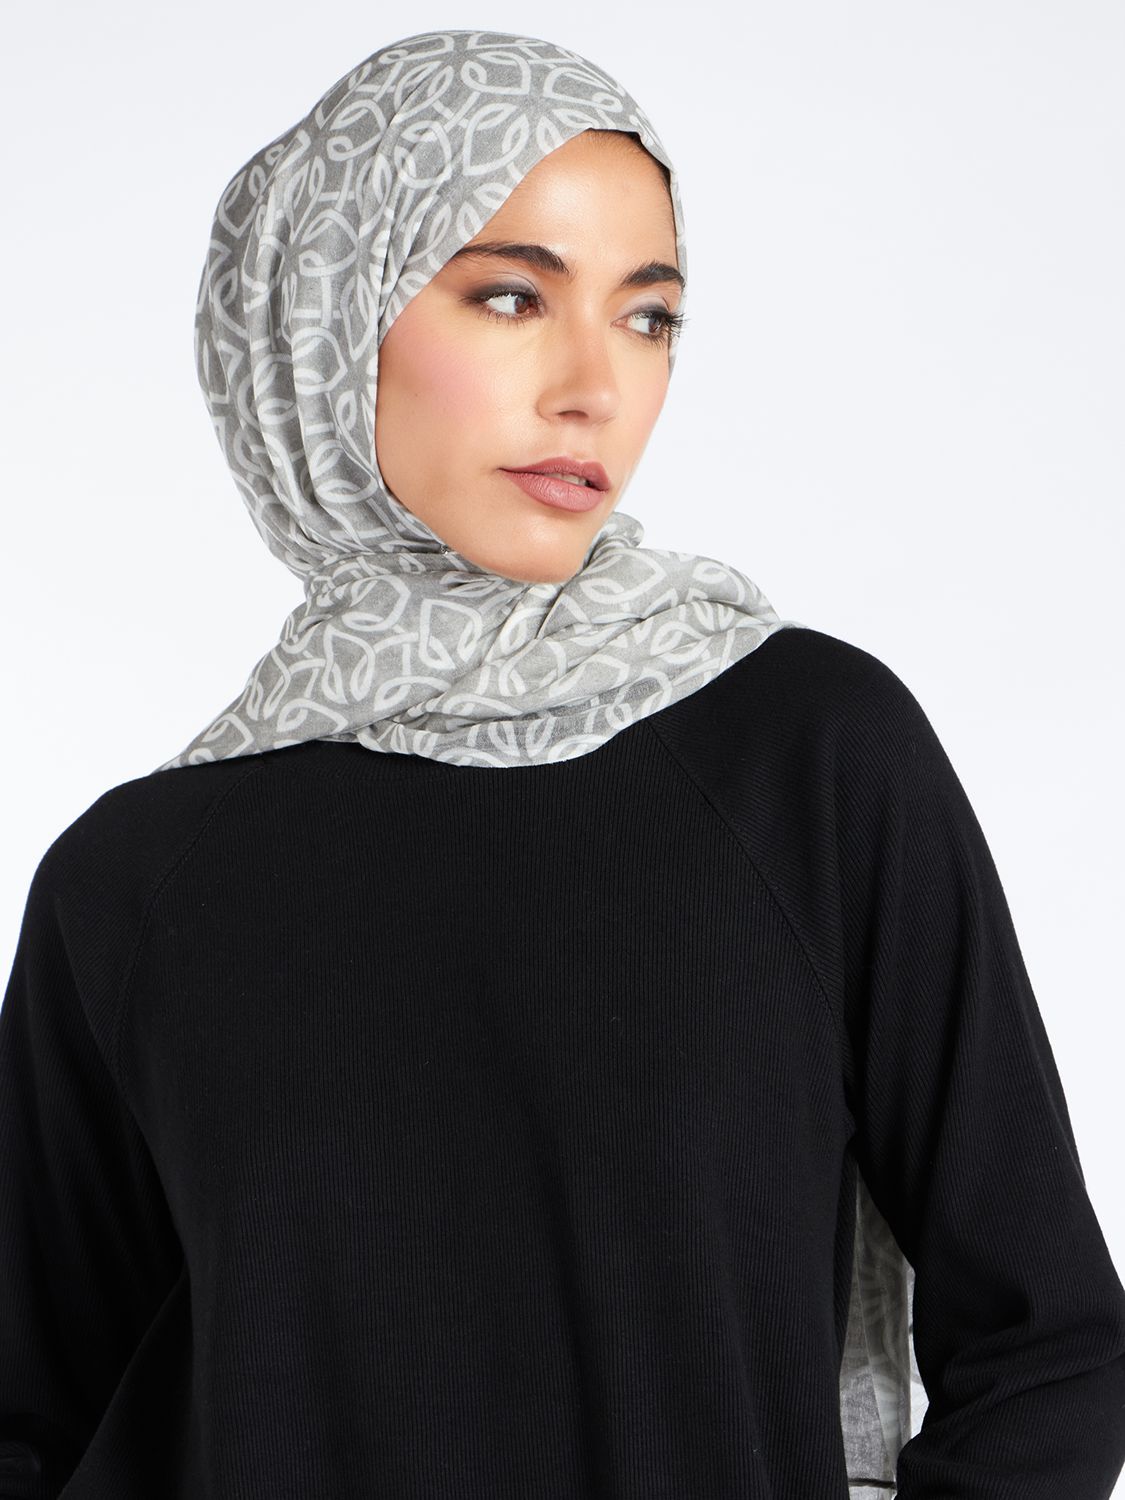 Aab Namat Abstract Print Hijab, Grey/Multi, One Size